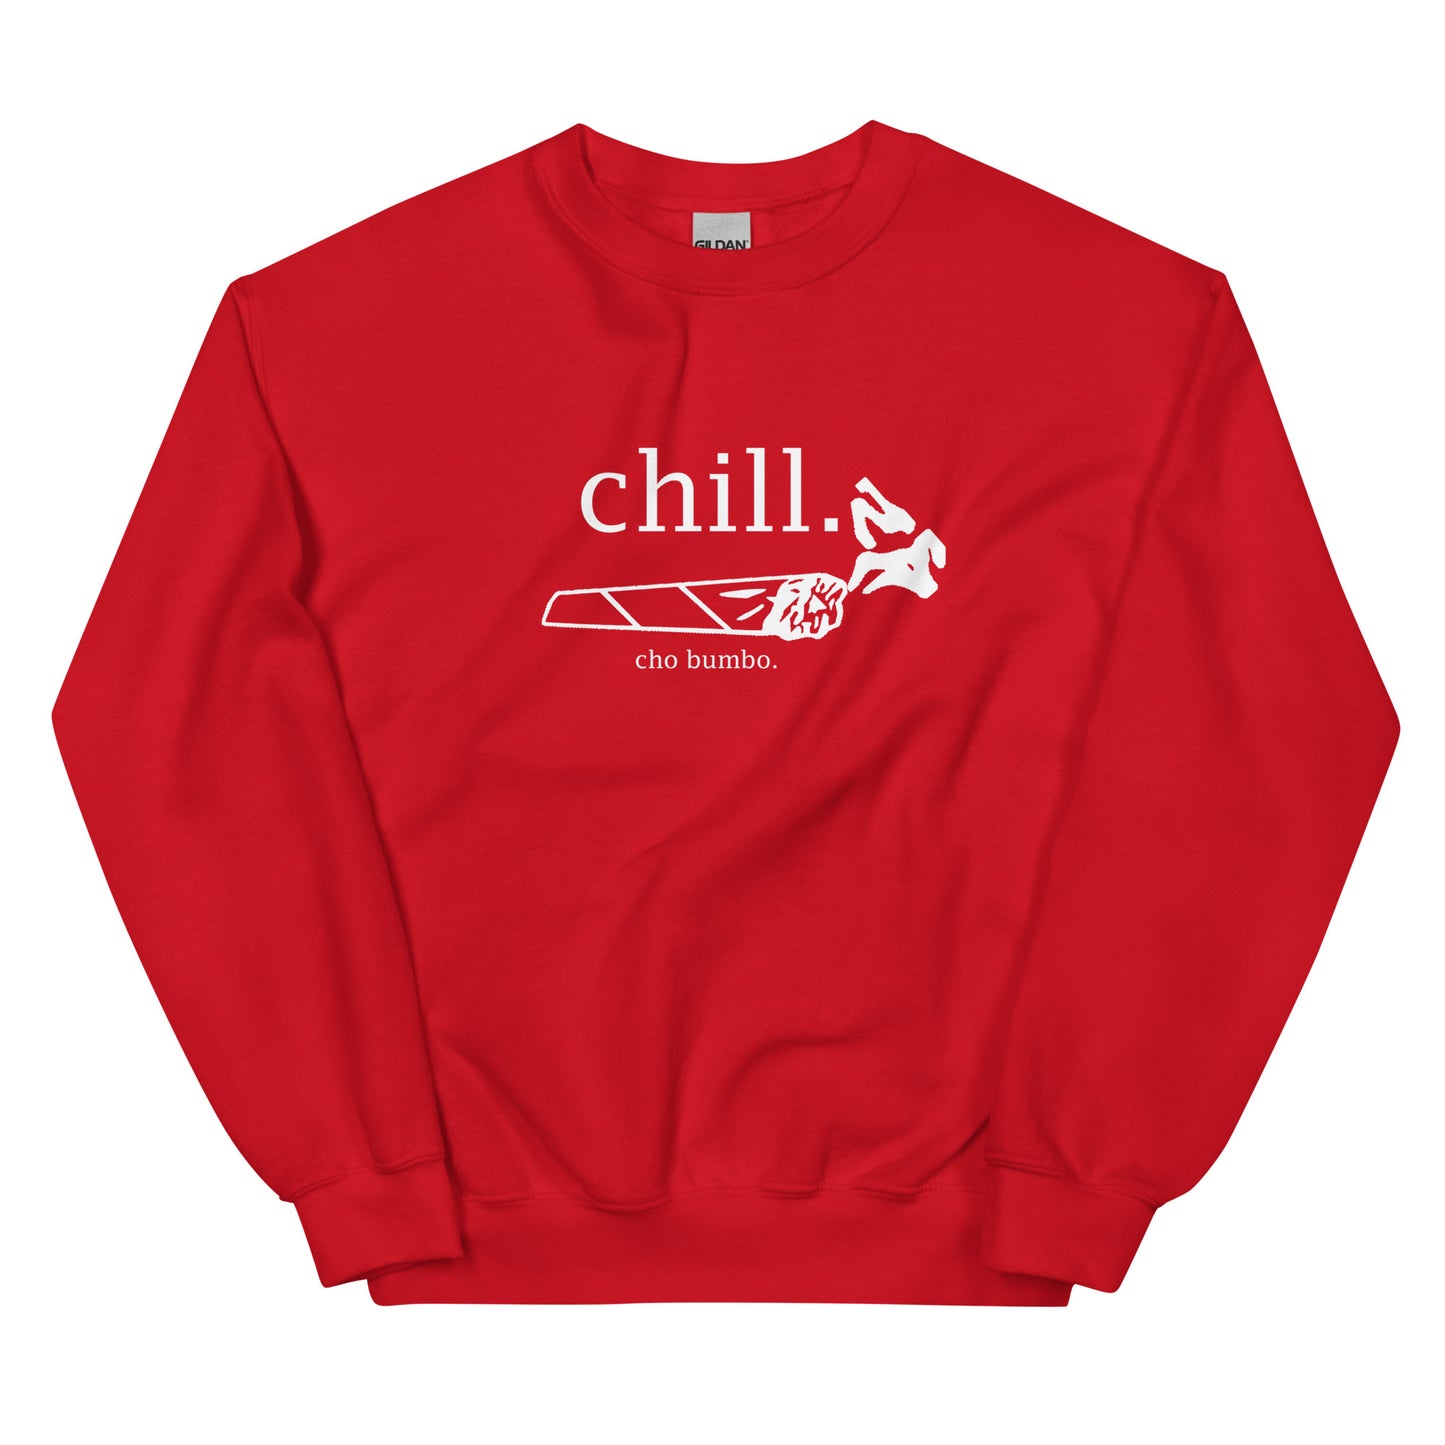 Chill "Cho bumbo" Sweatshirt